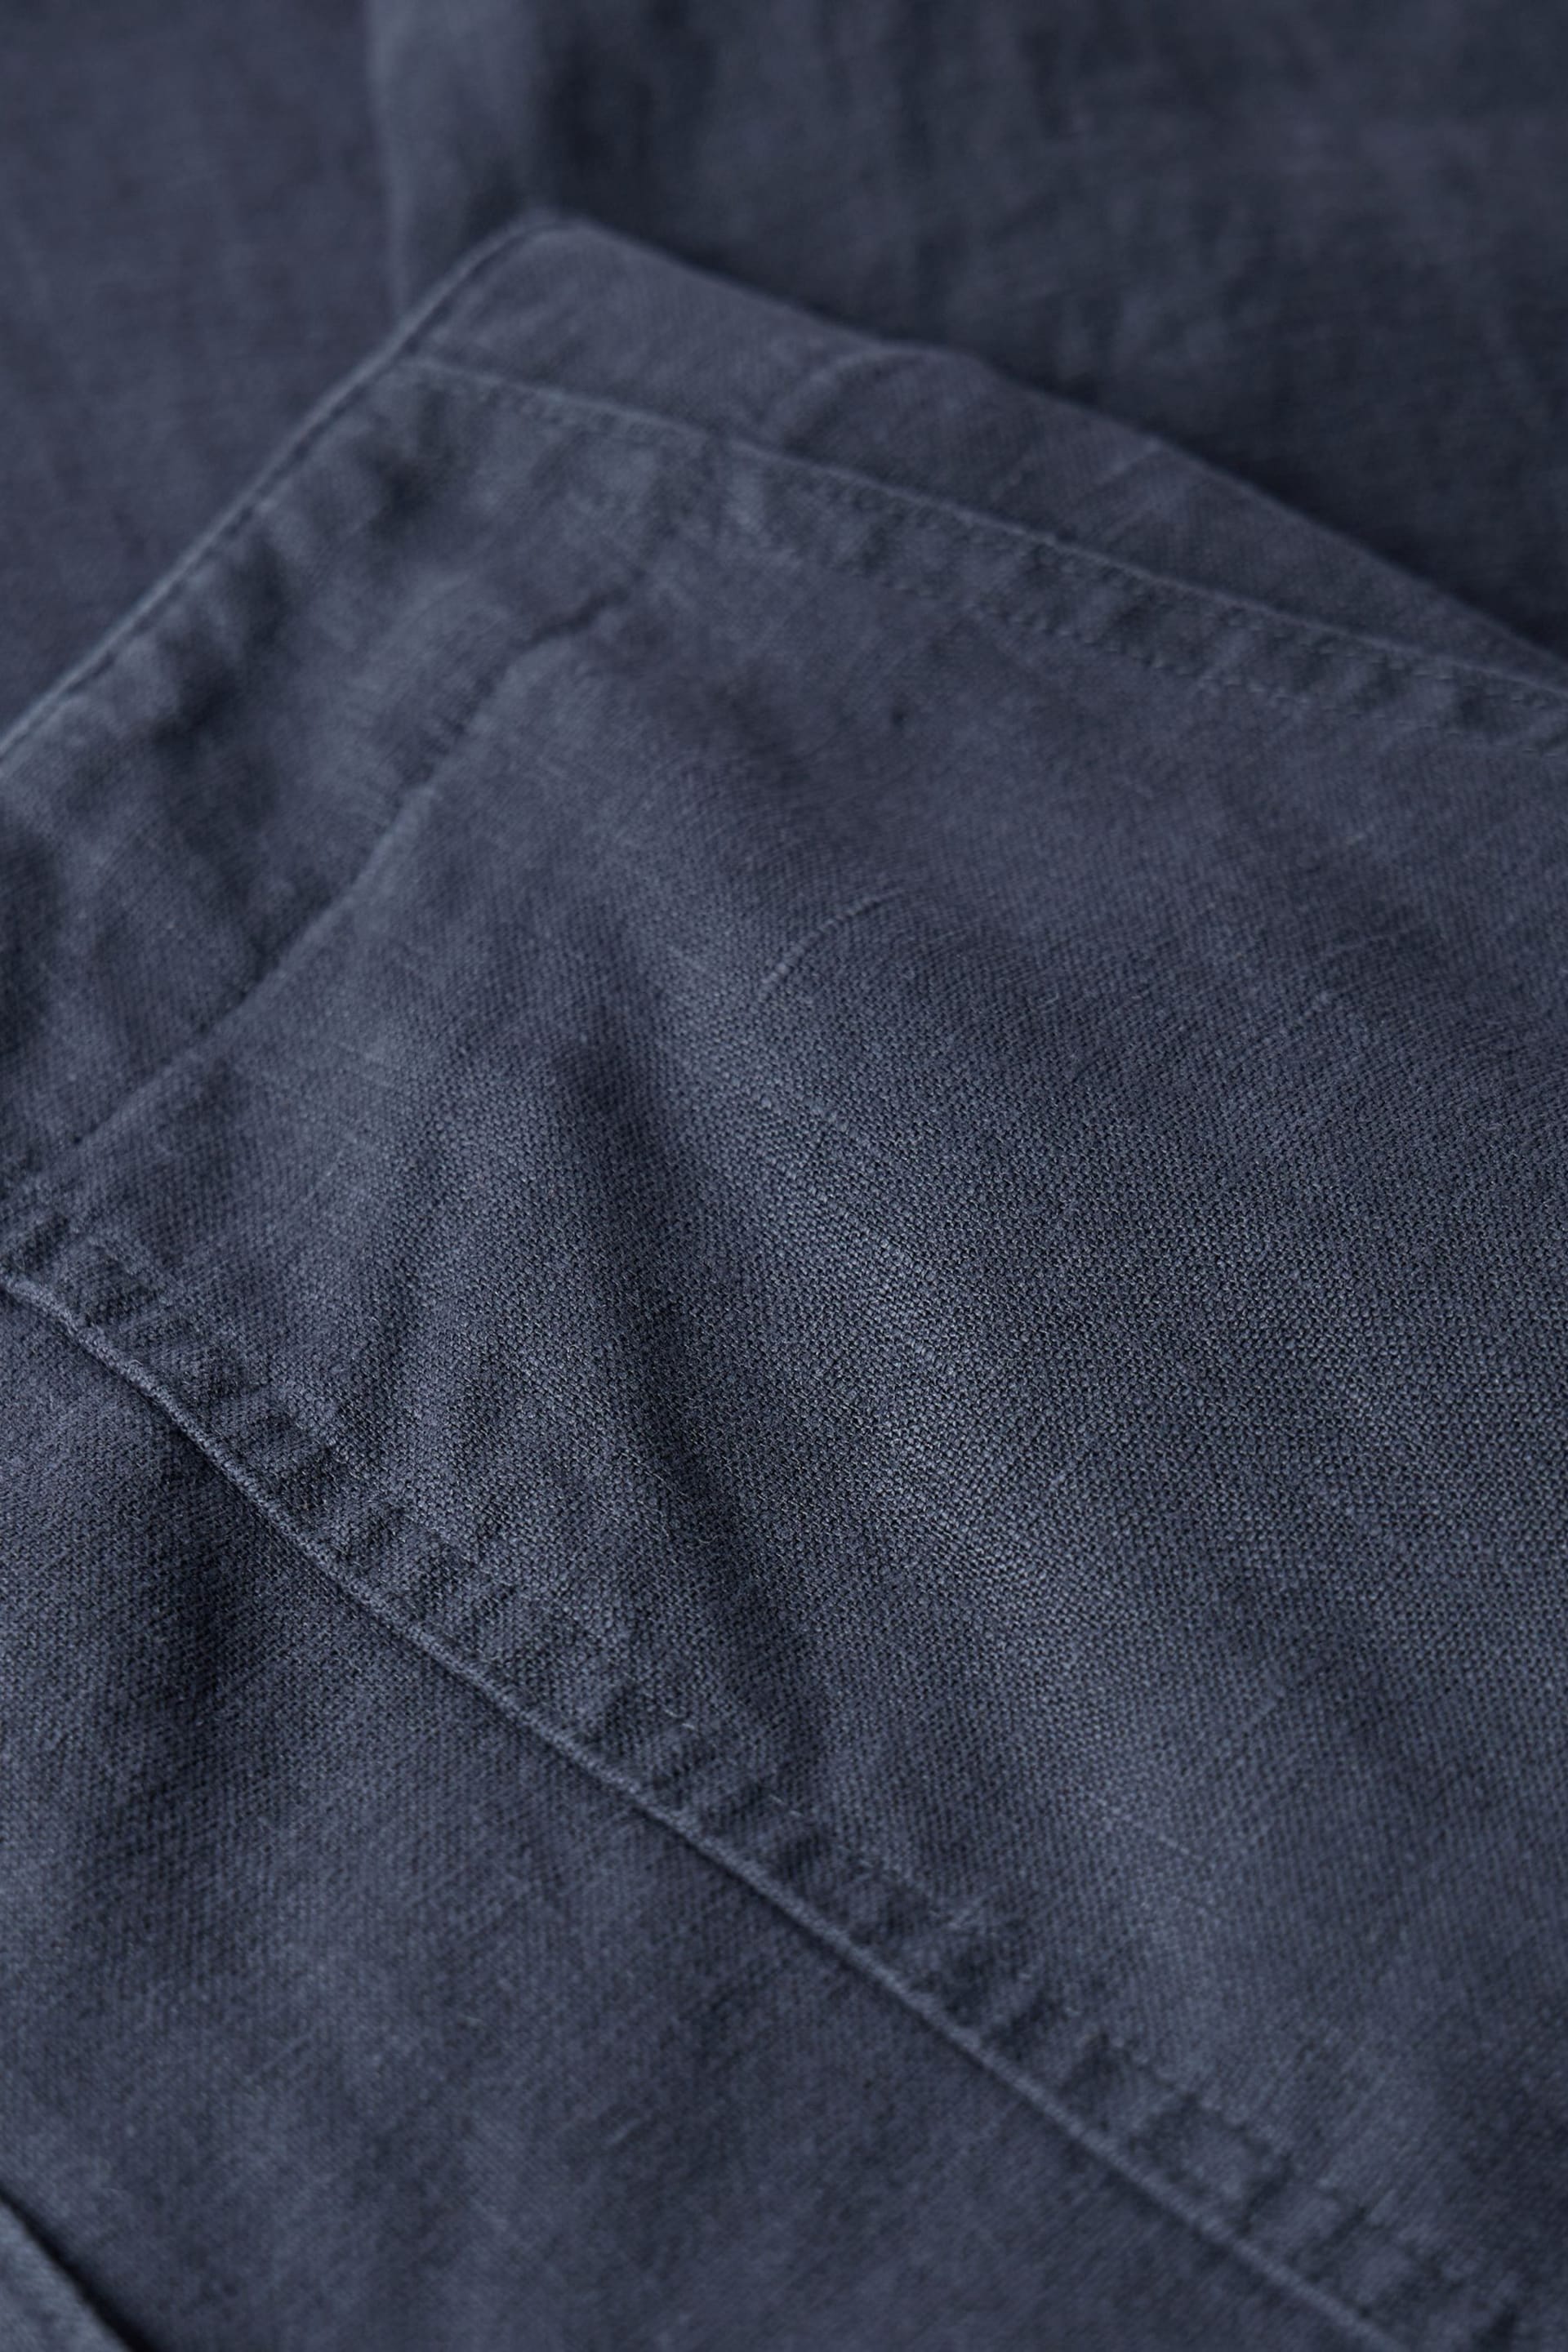 Seasalt Cornwall Blue Poleacre Trouser - Image 5 of 5